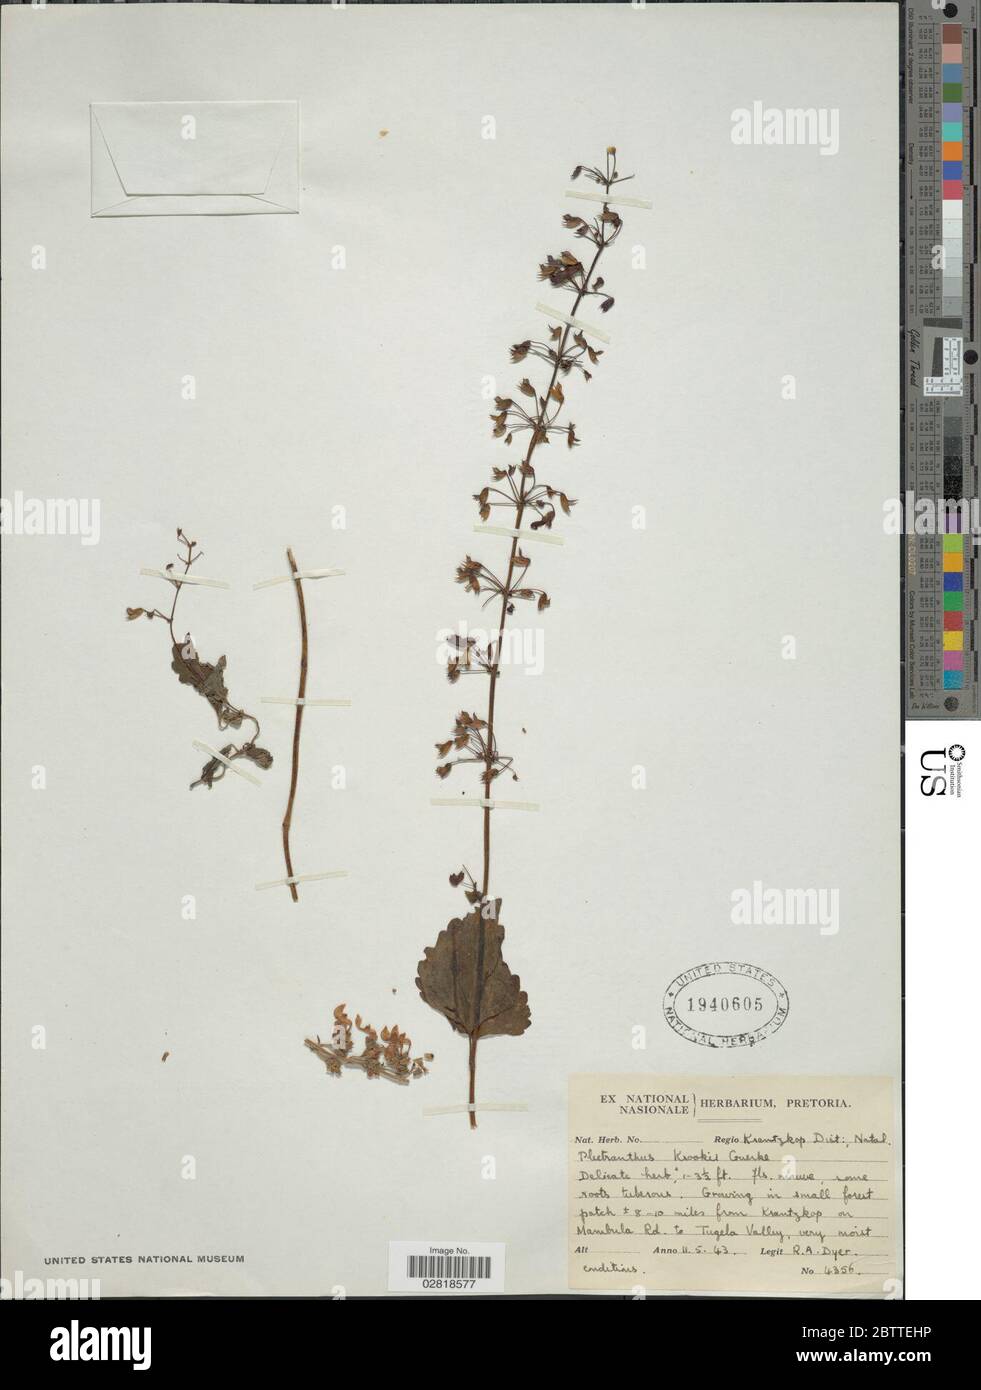 Plectranthus krookii Grke ex Zahlbr. Stock Photo